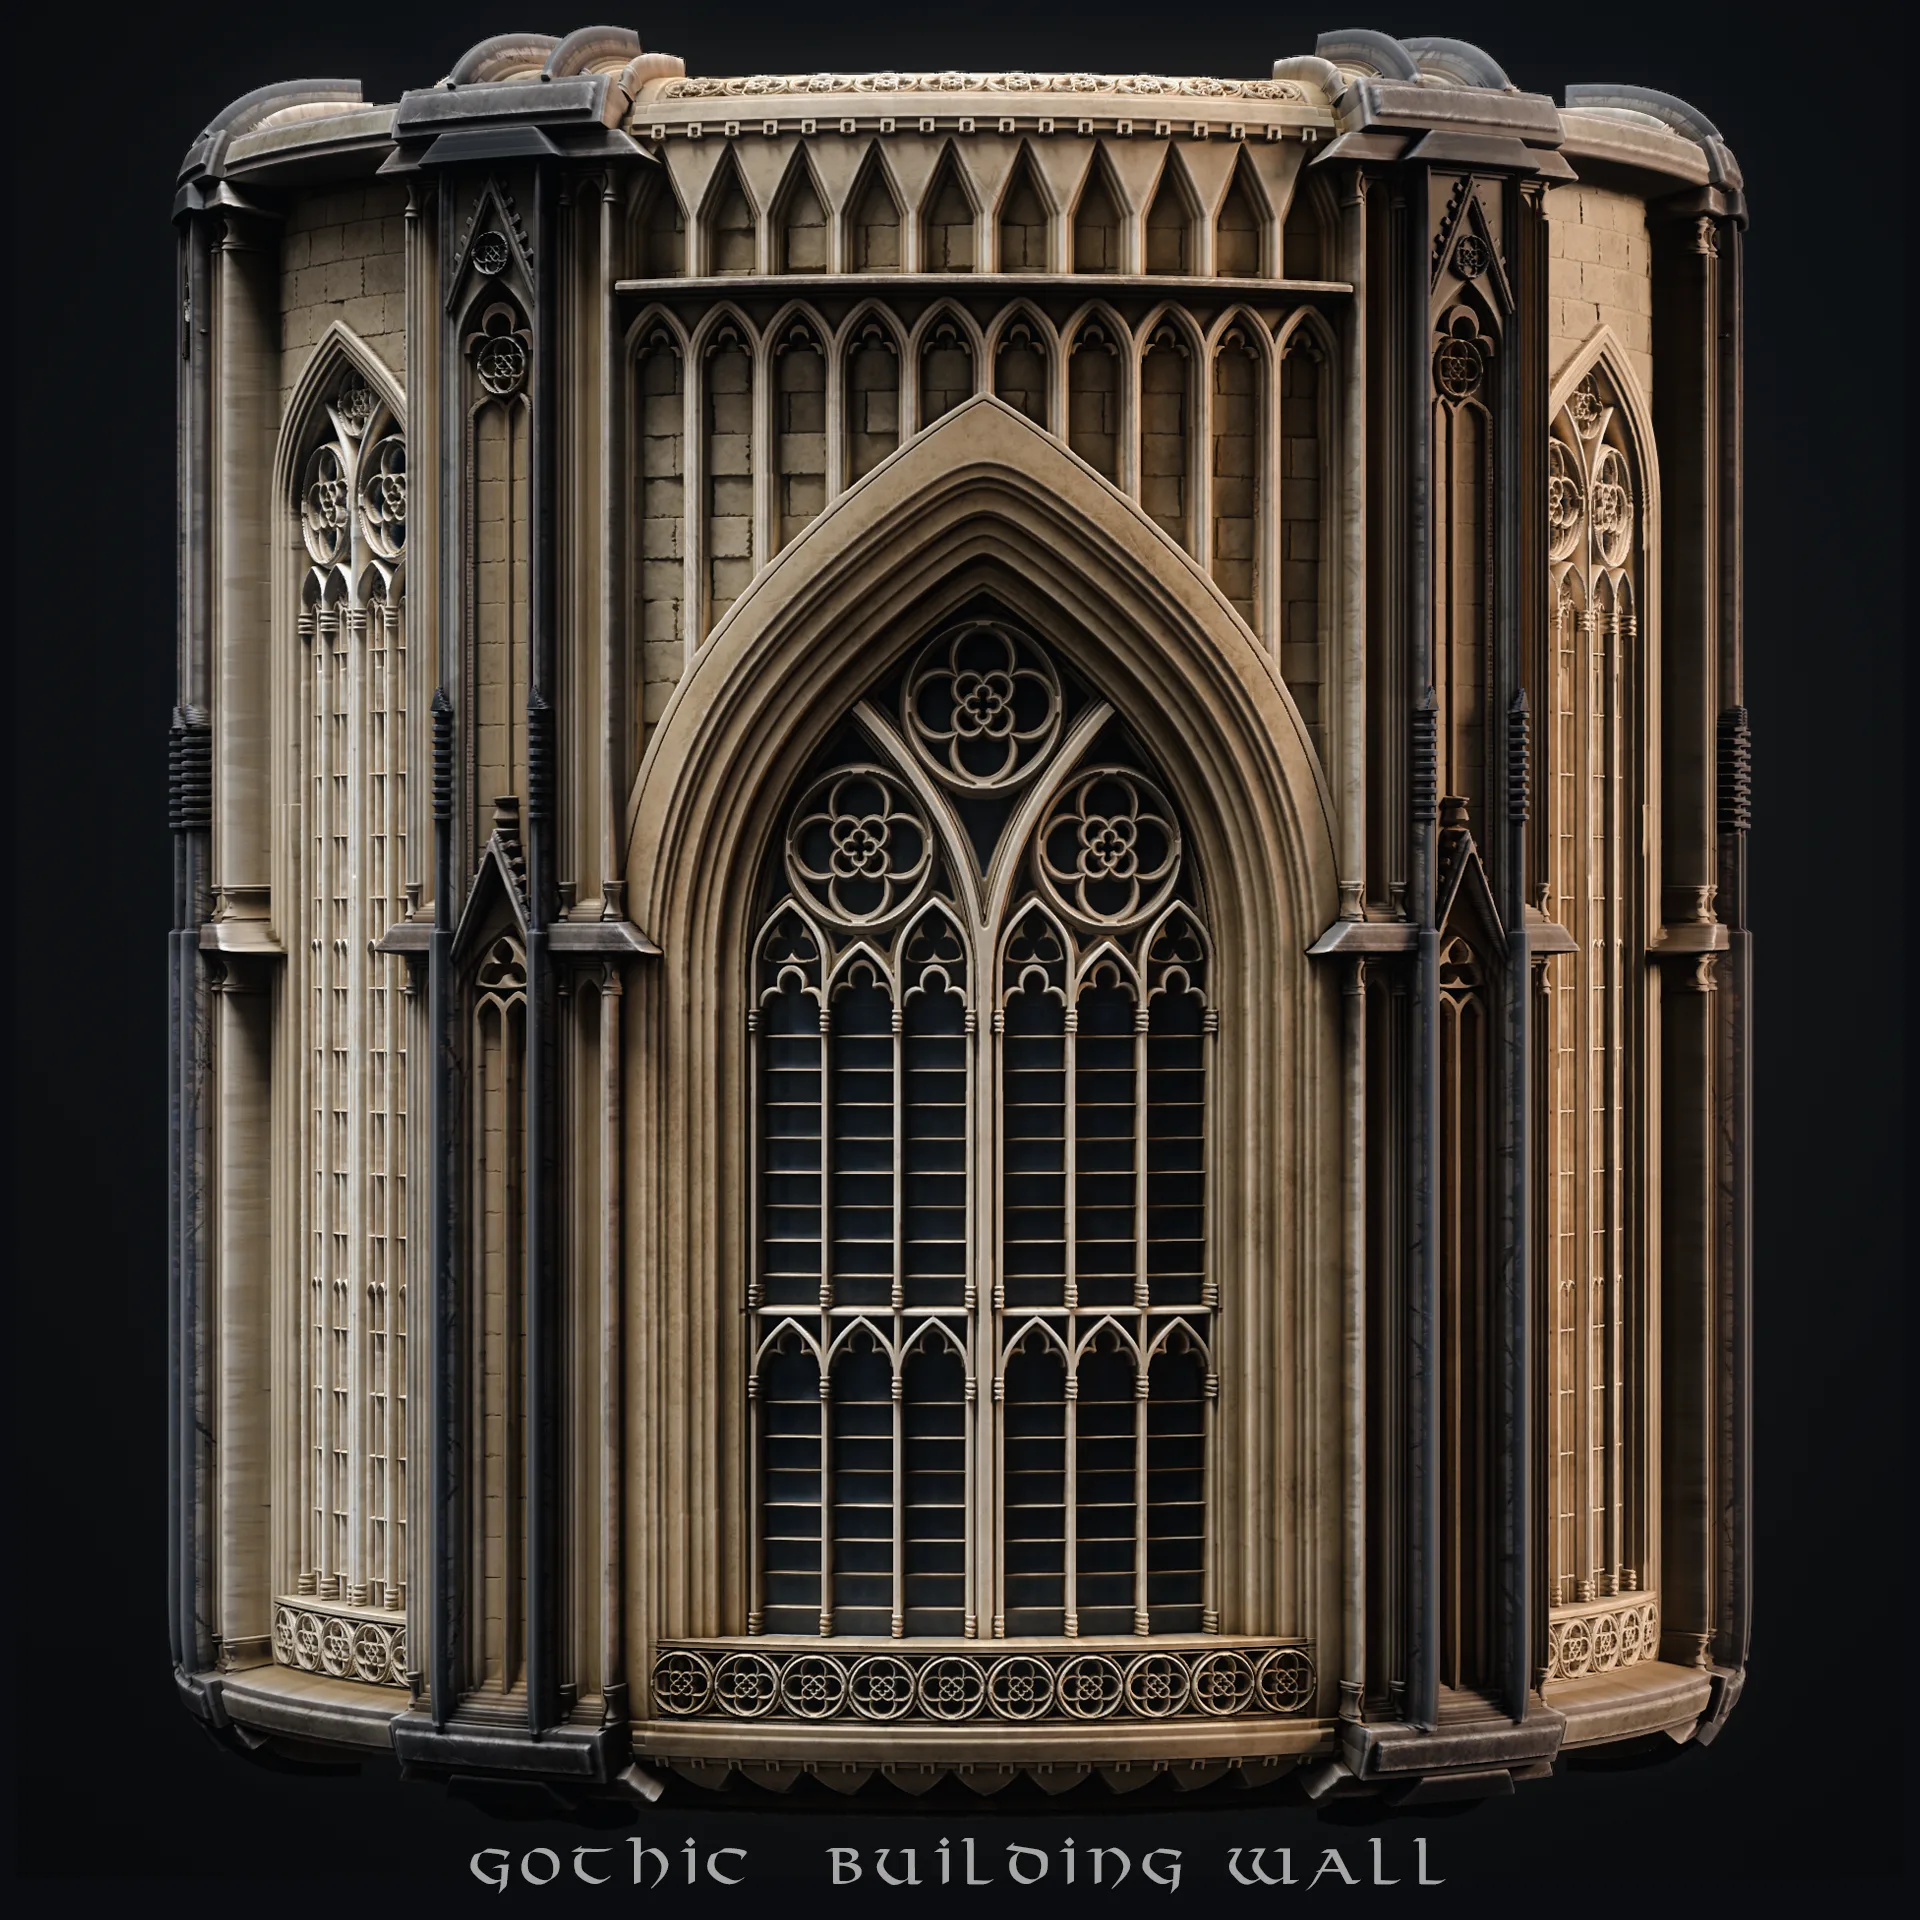 Subtance designer tutorial - Gothic building wall